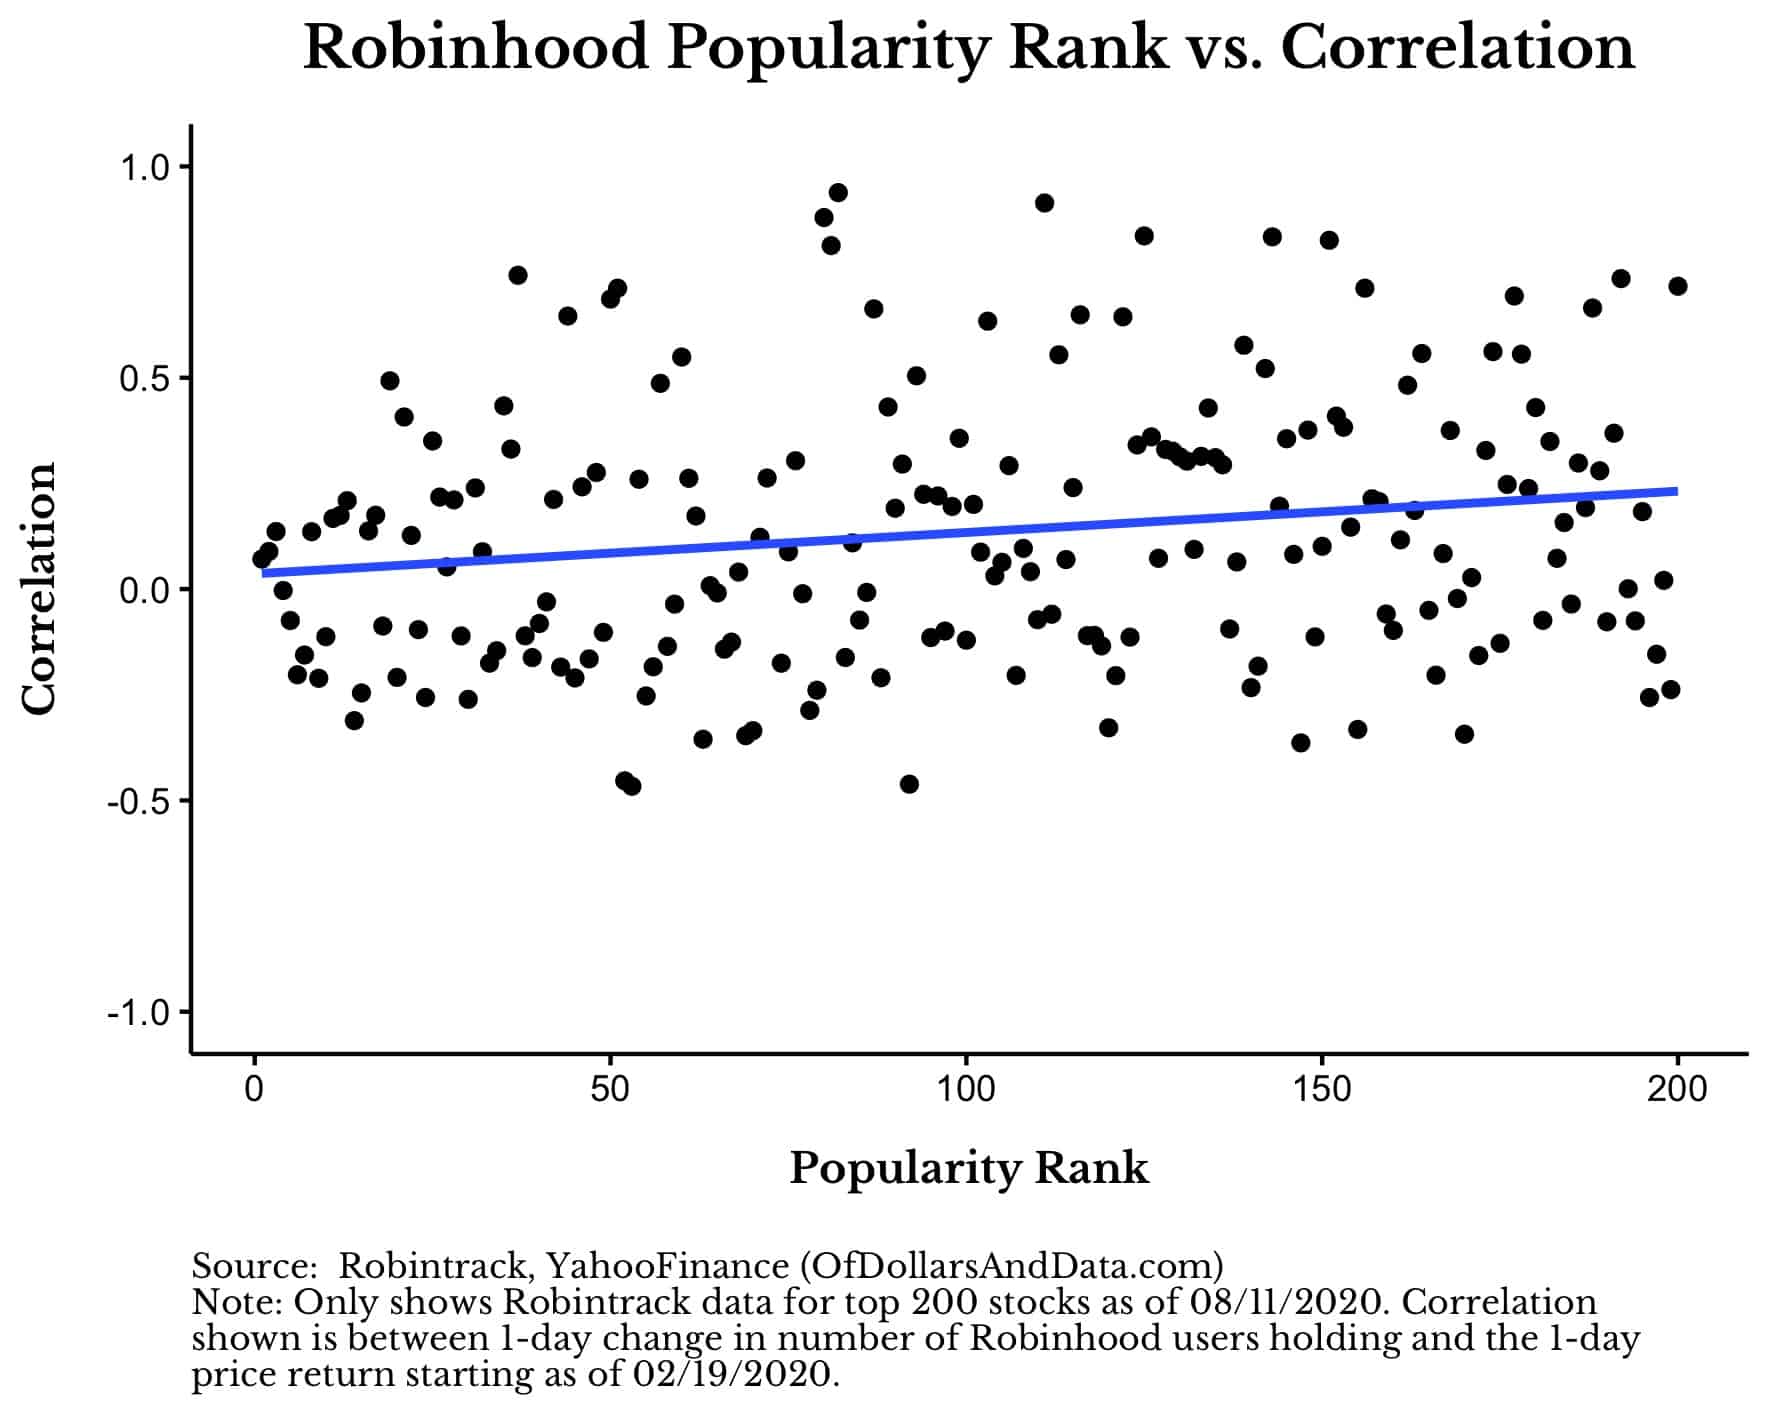 Robinhood popularity rank vs correlation with stock price.